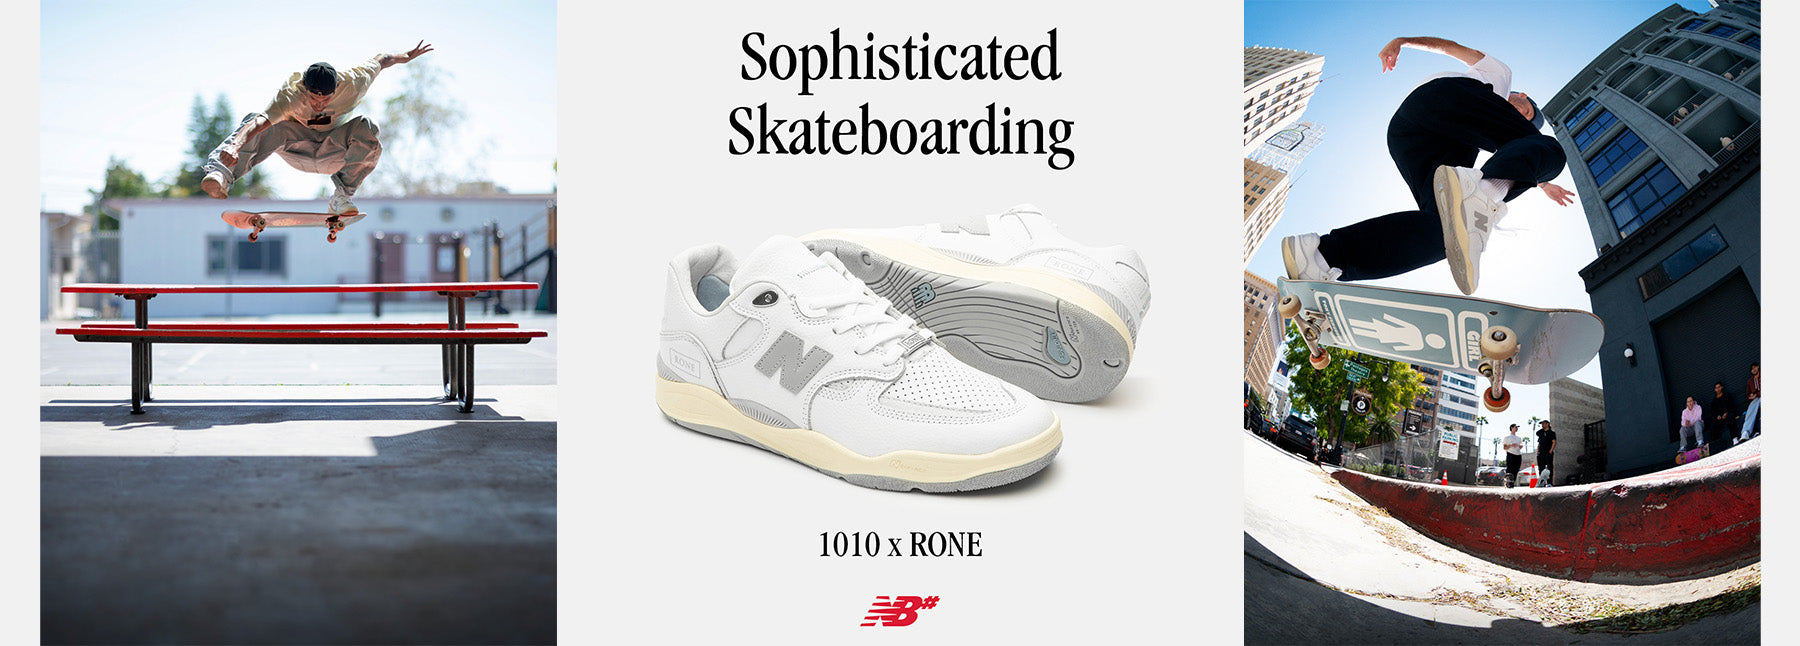 Skateshop - Skateboards, Skate Clothing And